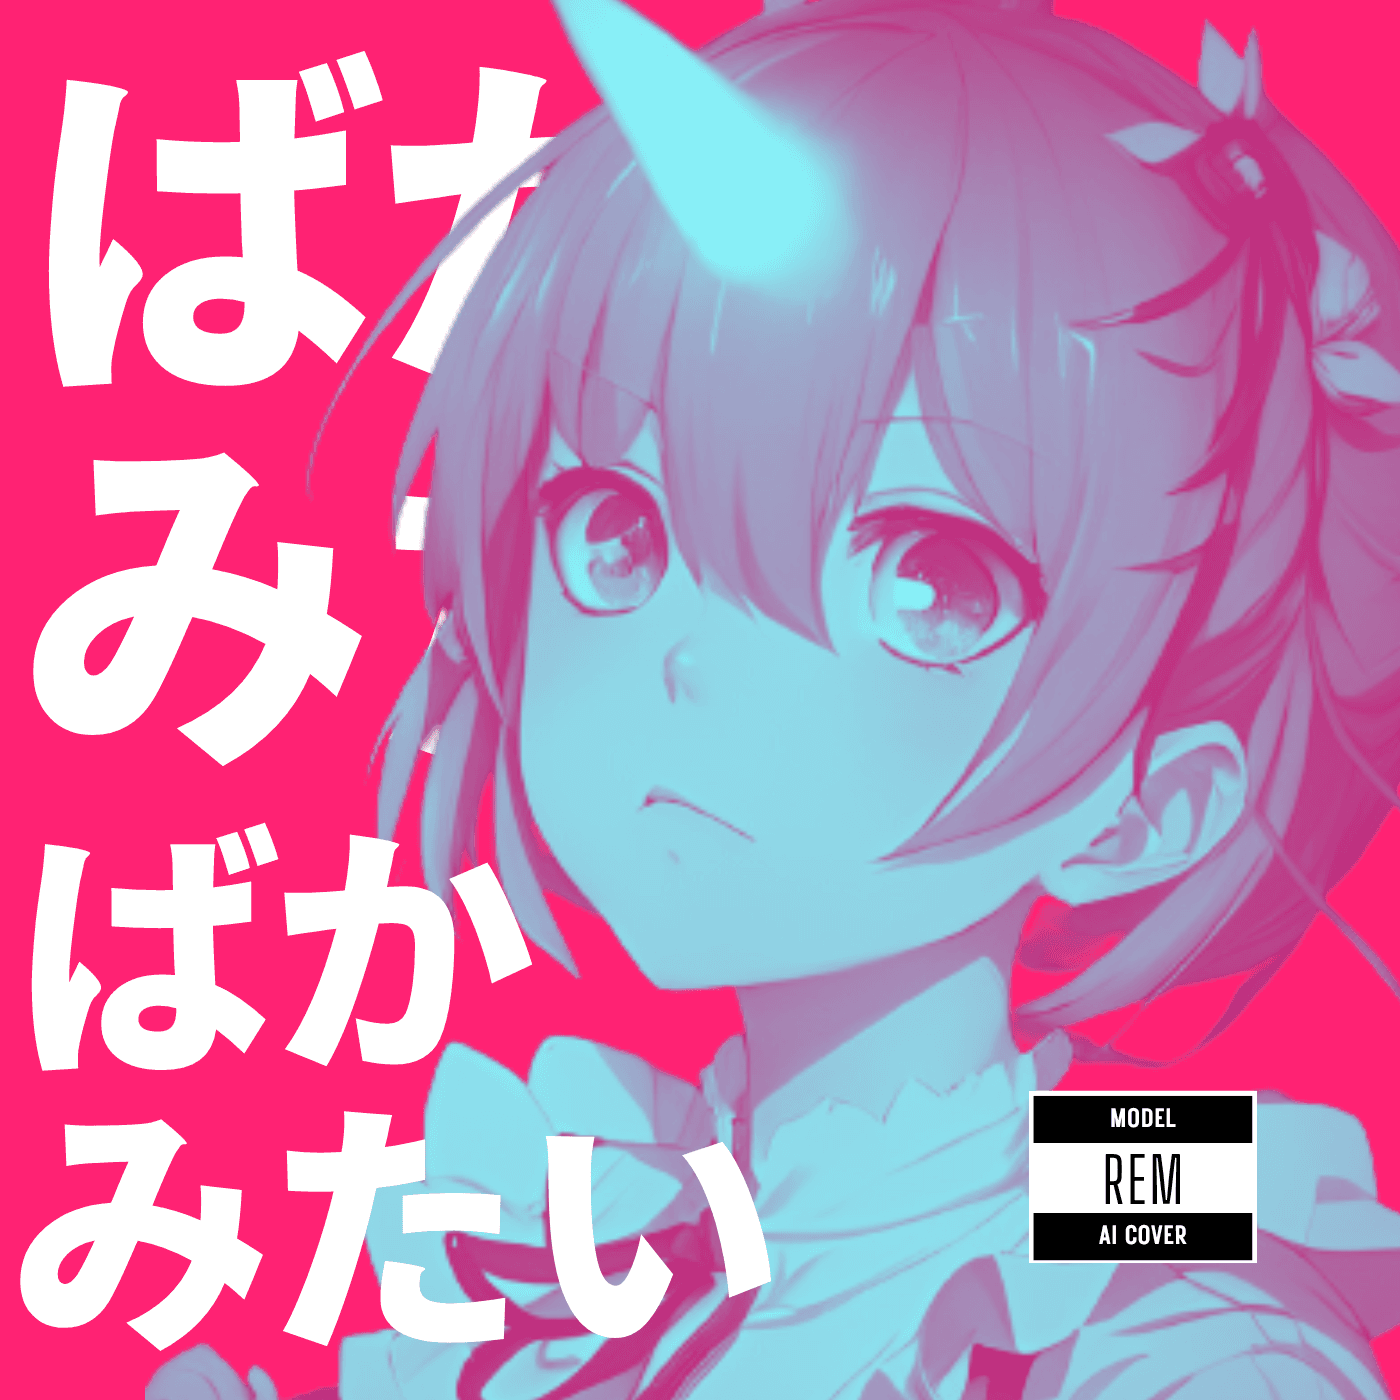 Yakuza OST - Baka Mitai (Rem AI Cover)